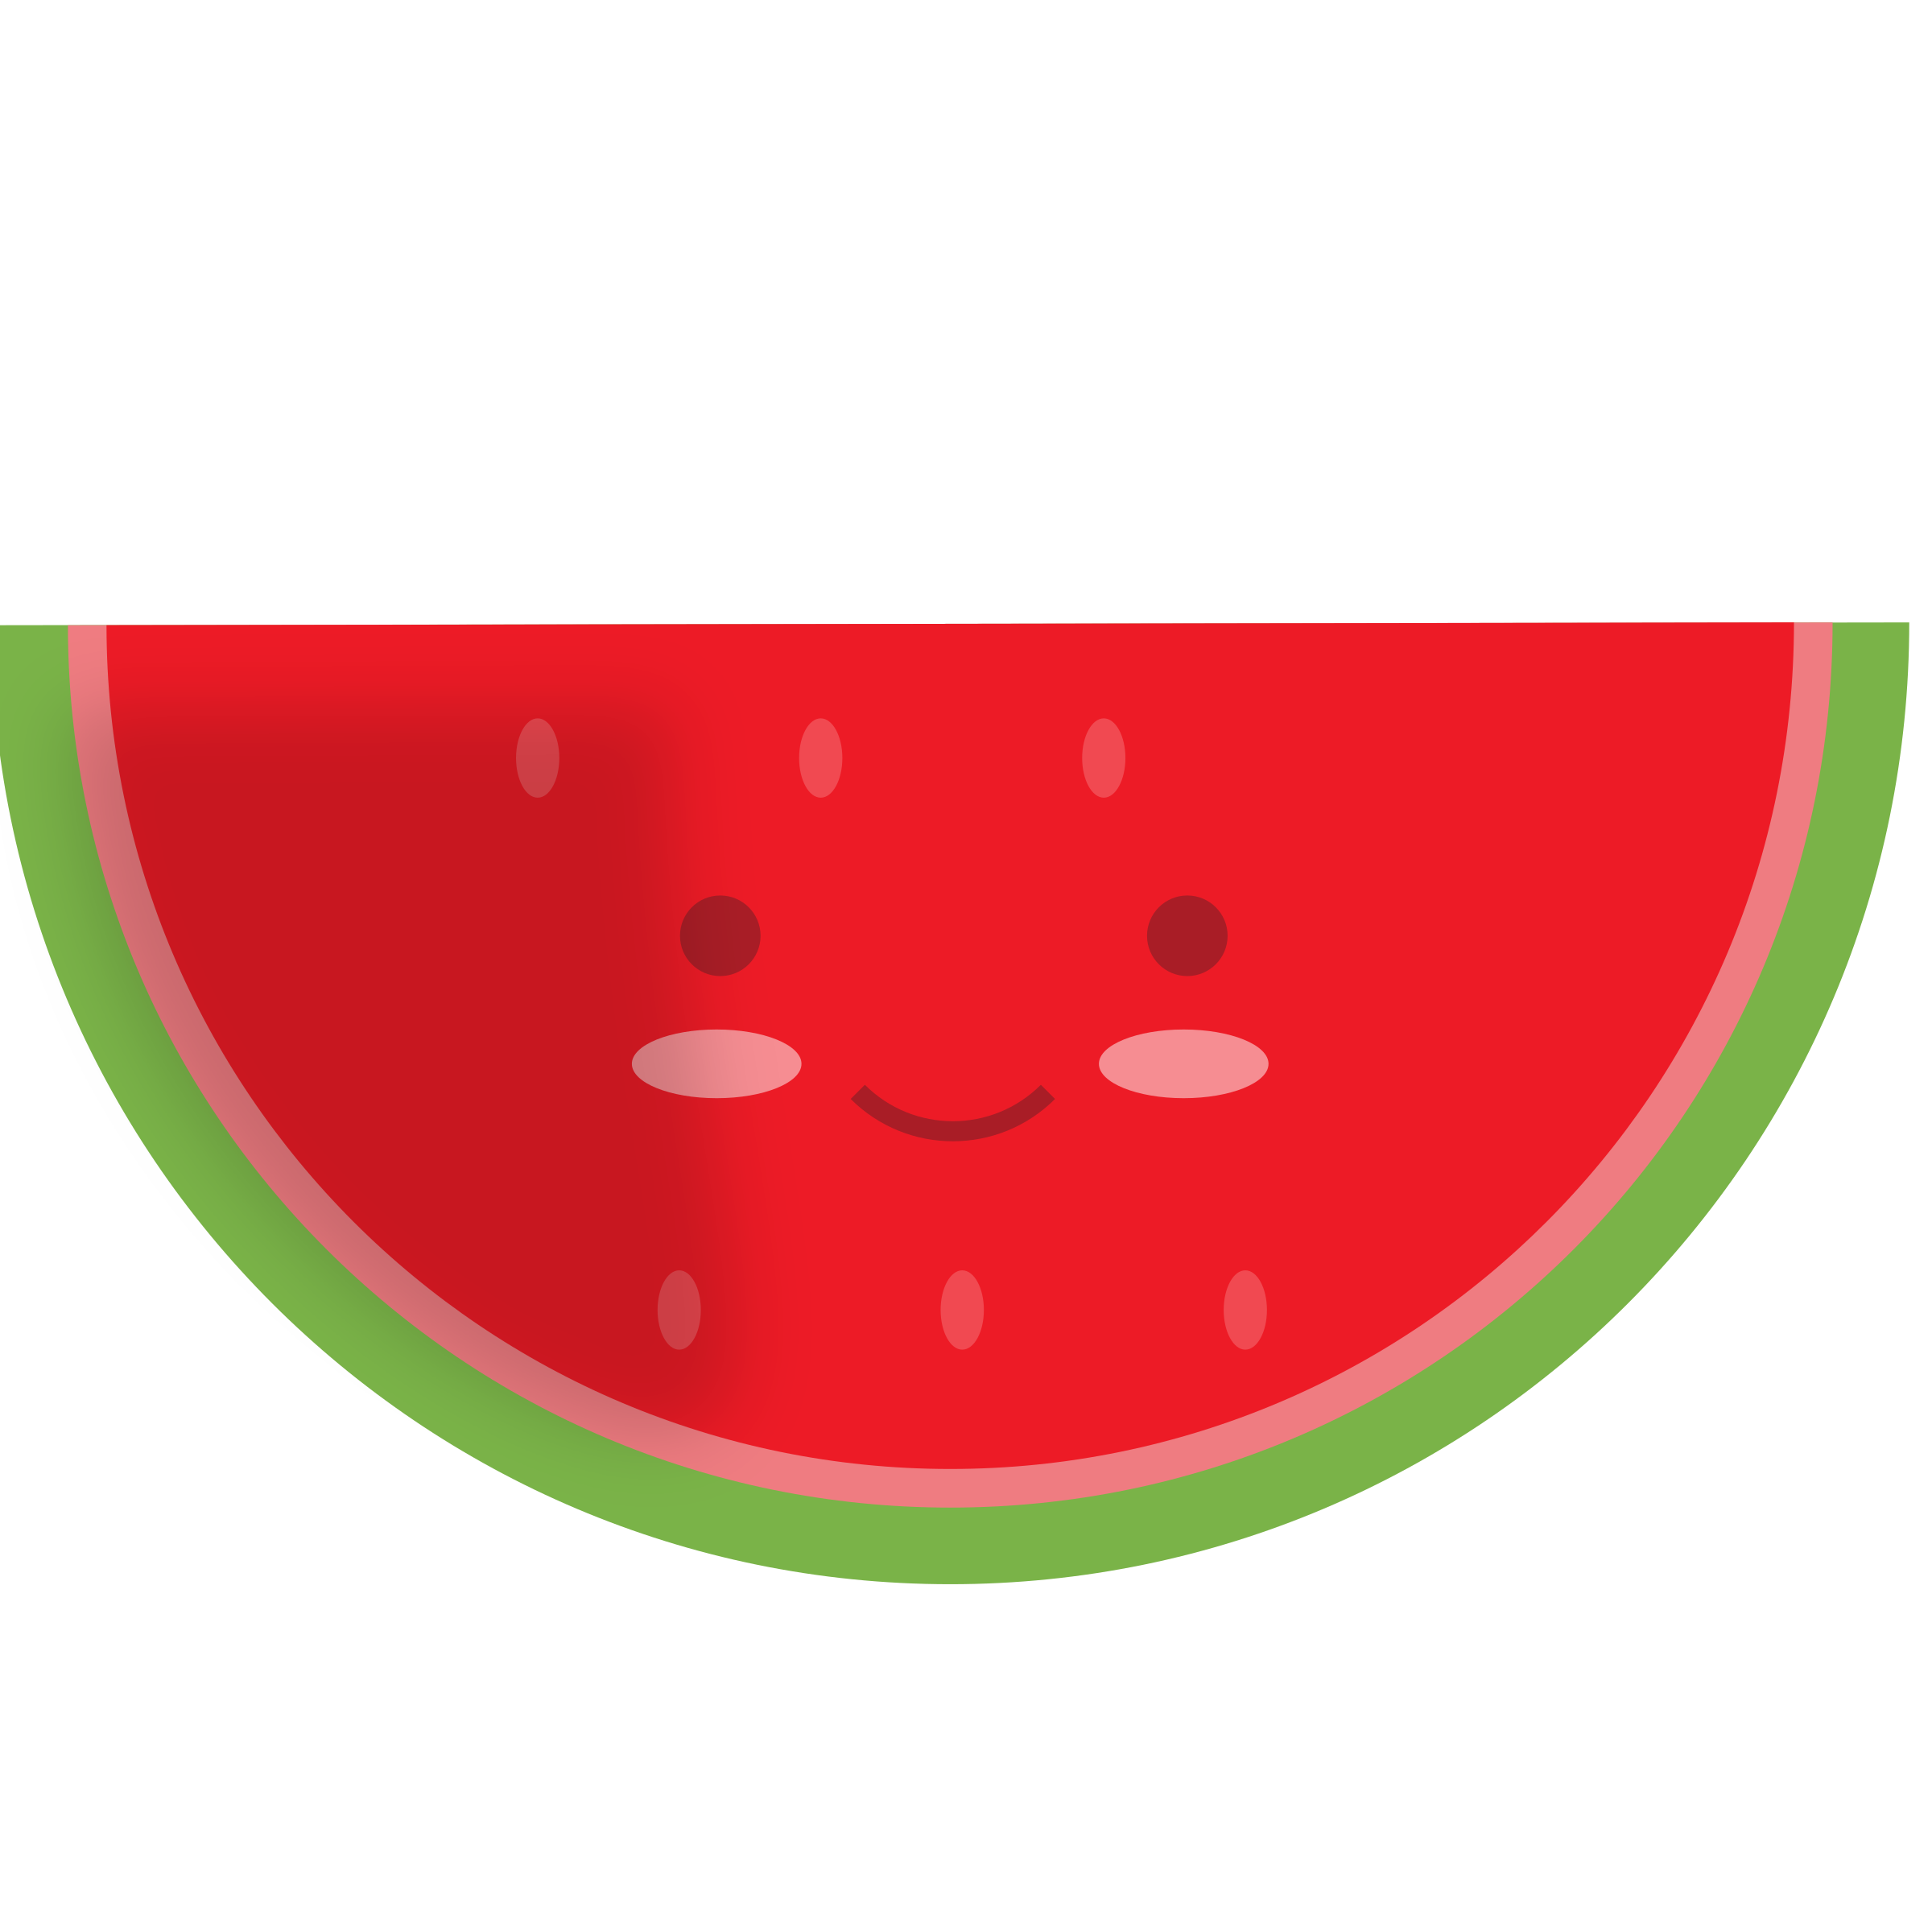 Watermellon big image png. Watermelon clipart smile